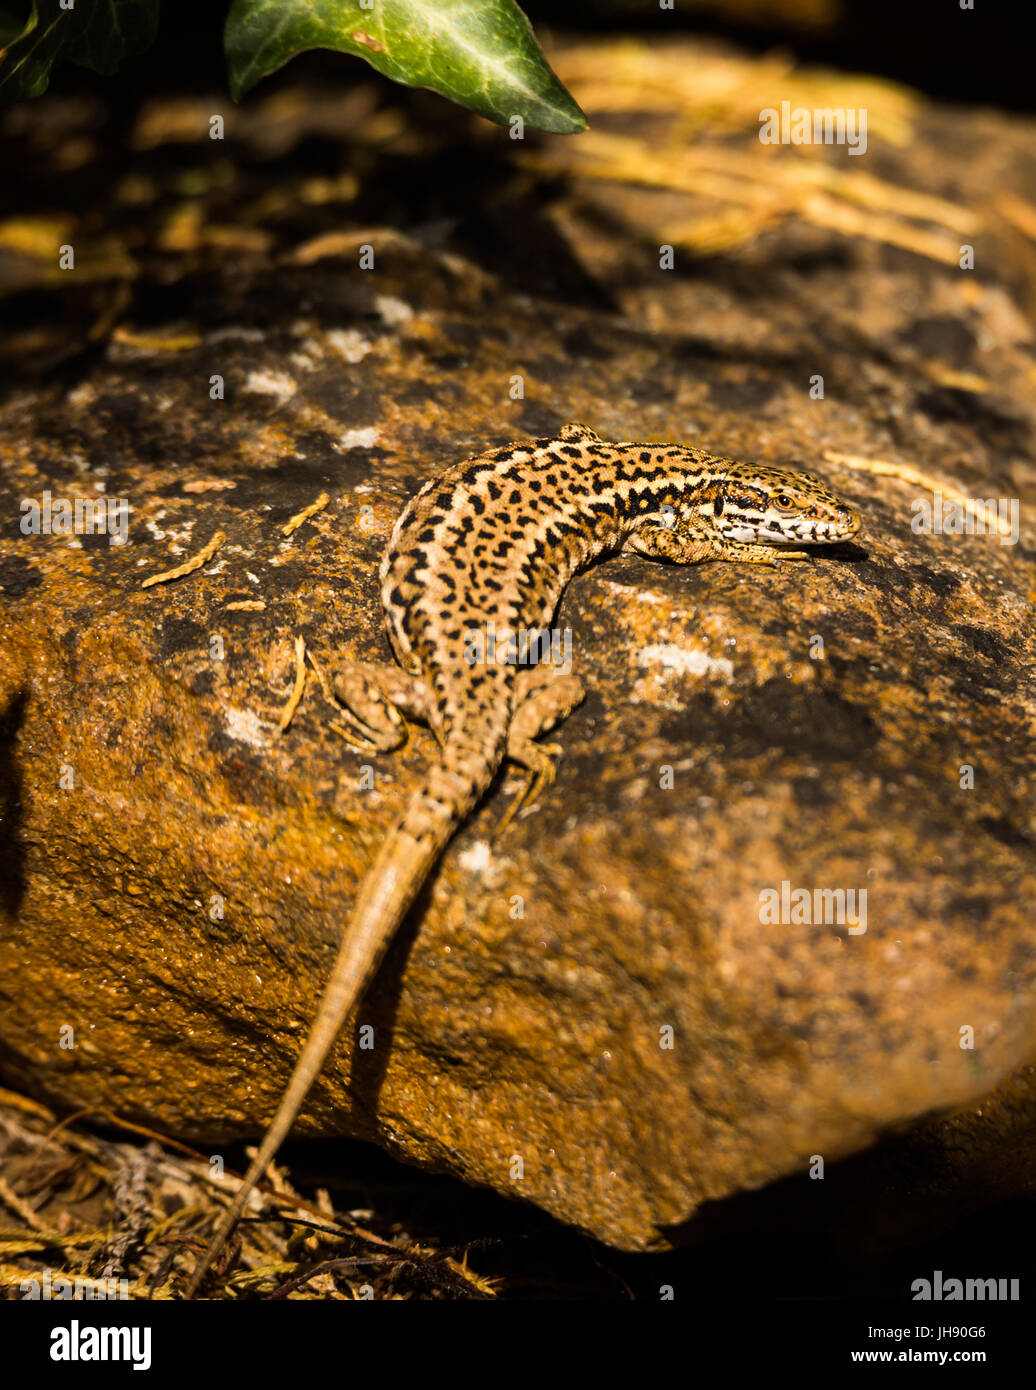 Lizard on a rock Stock Photo